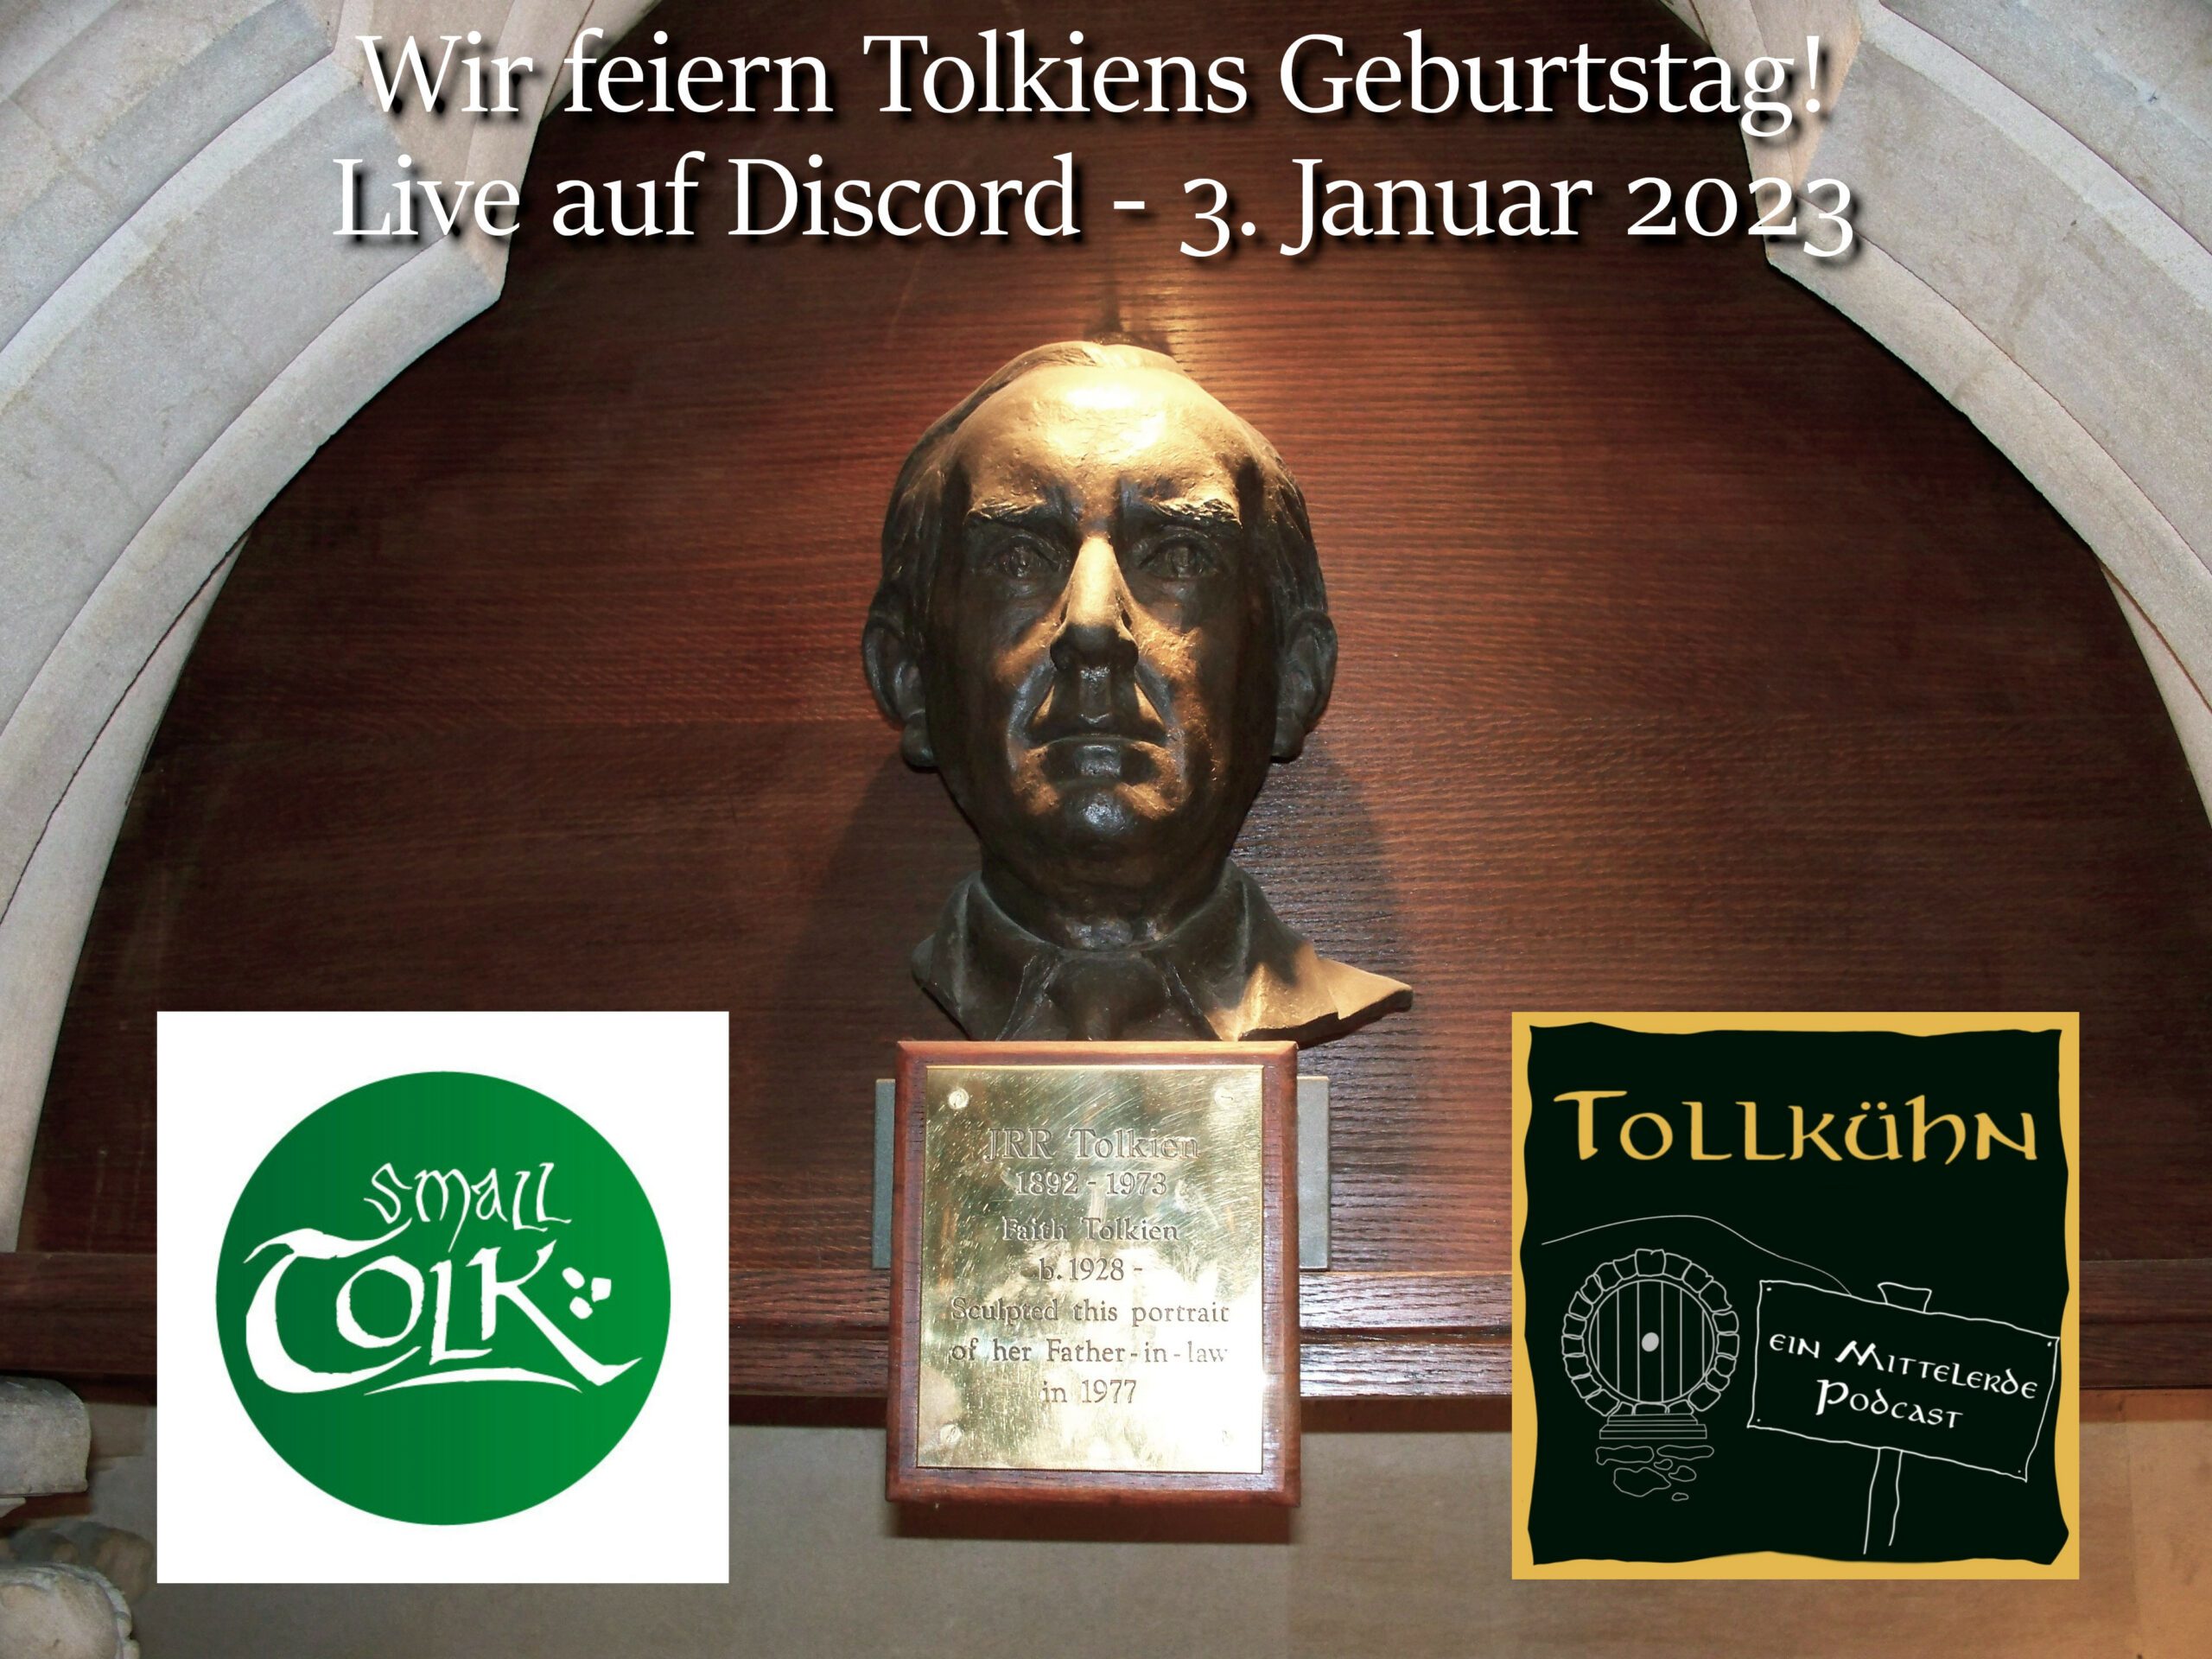 Wir feiern Tolkiens Geburtstag am 3. Januar!